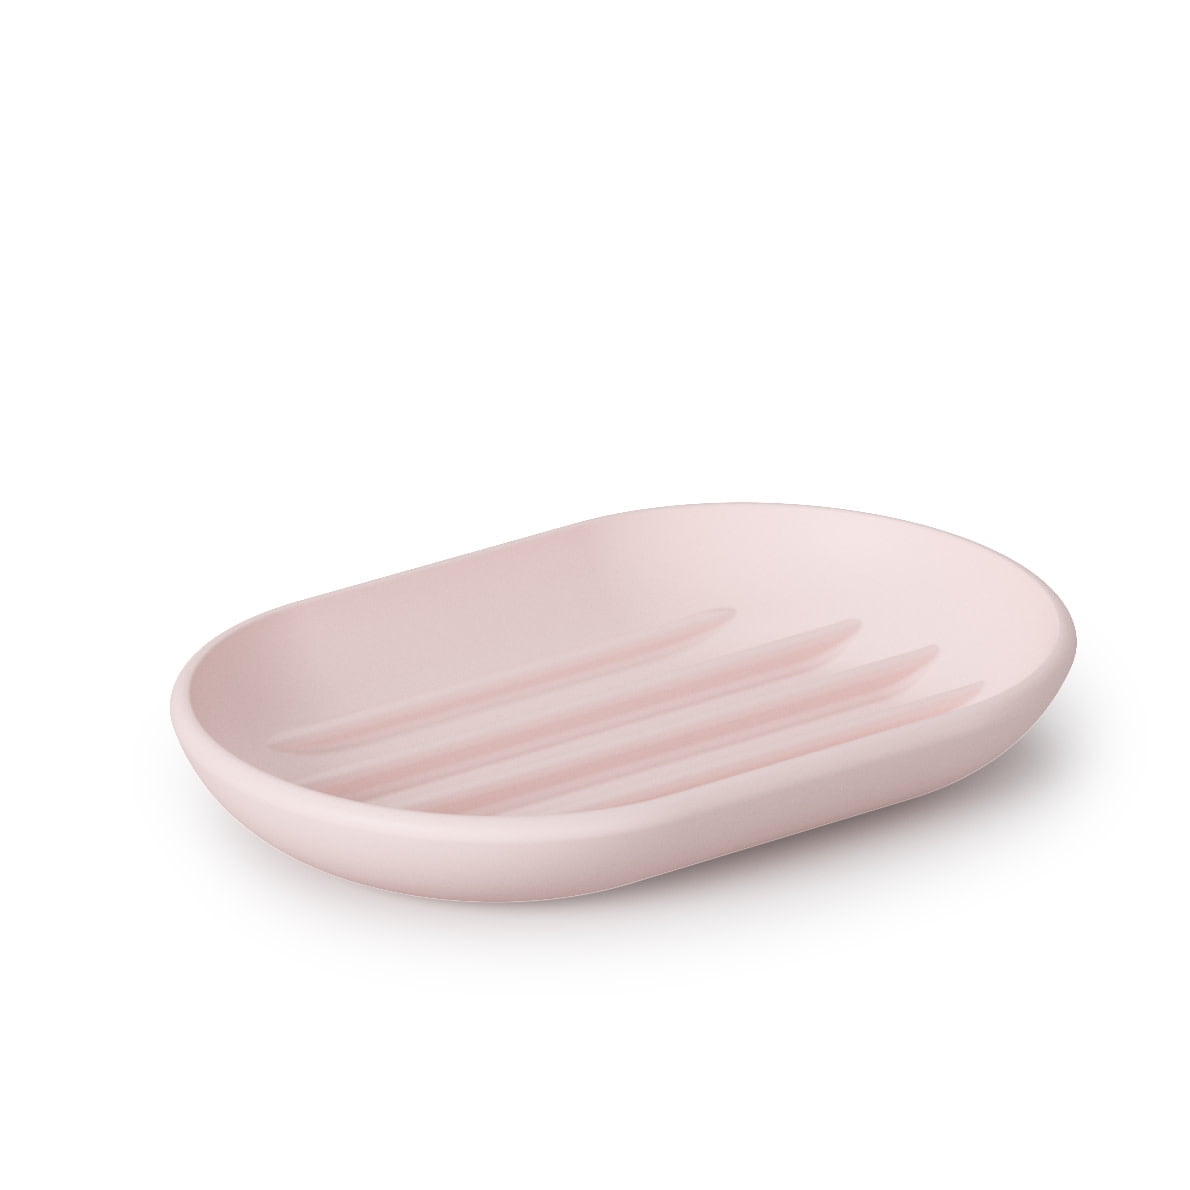 Umbra Blush Pink Polypropylene Soap Dish - Walmart.com